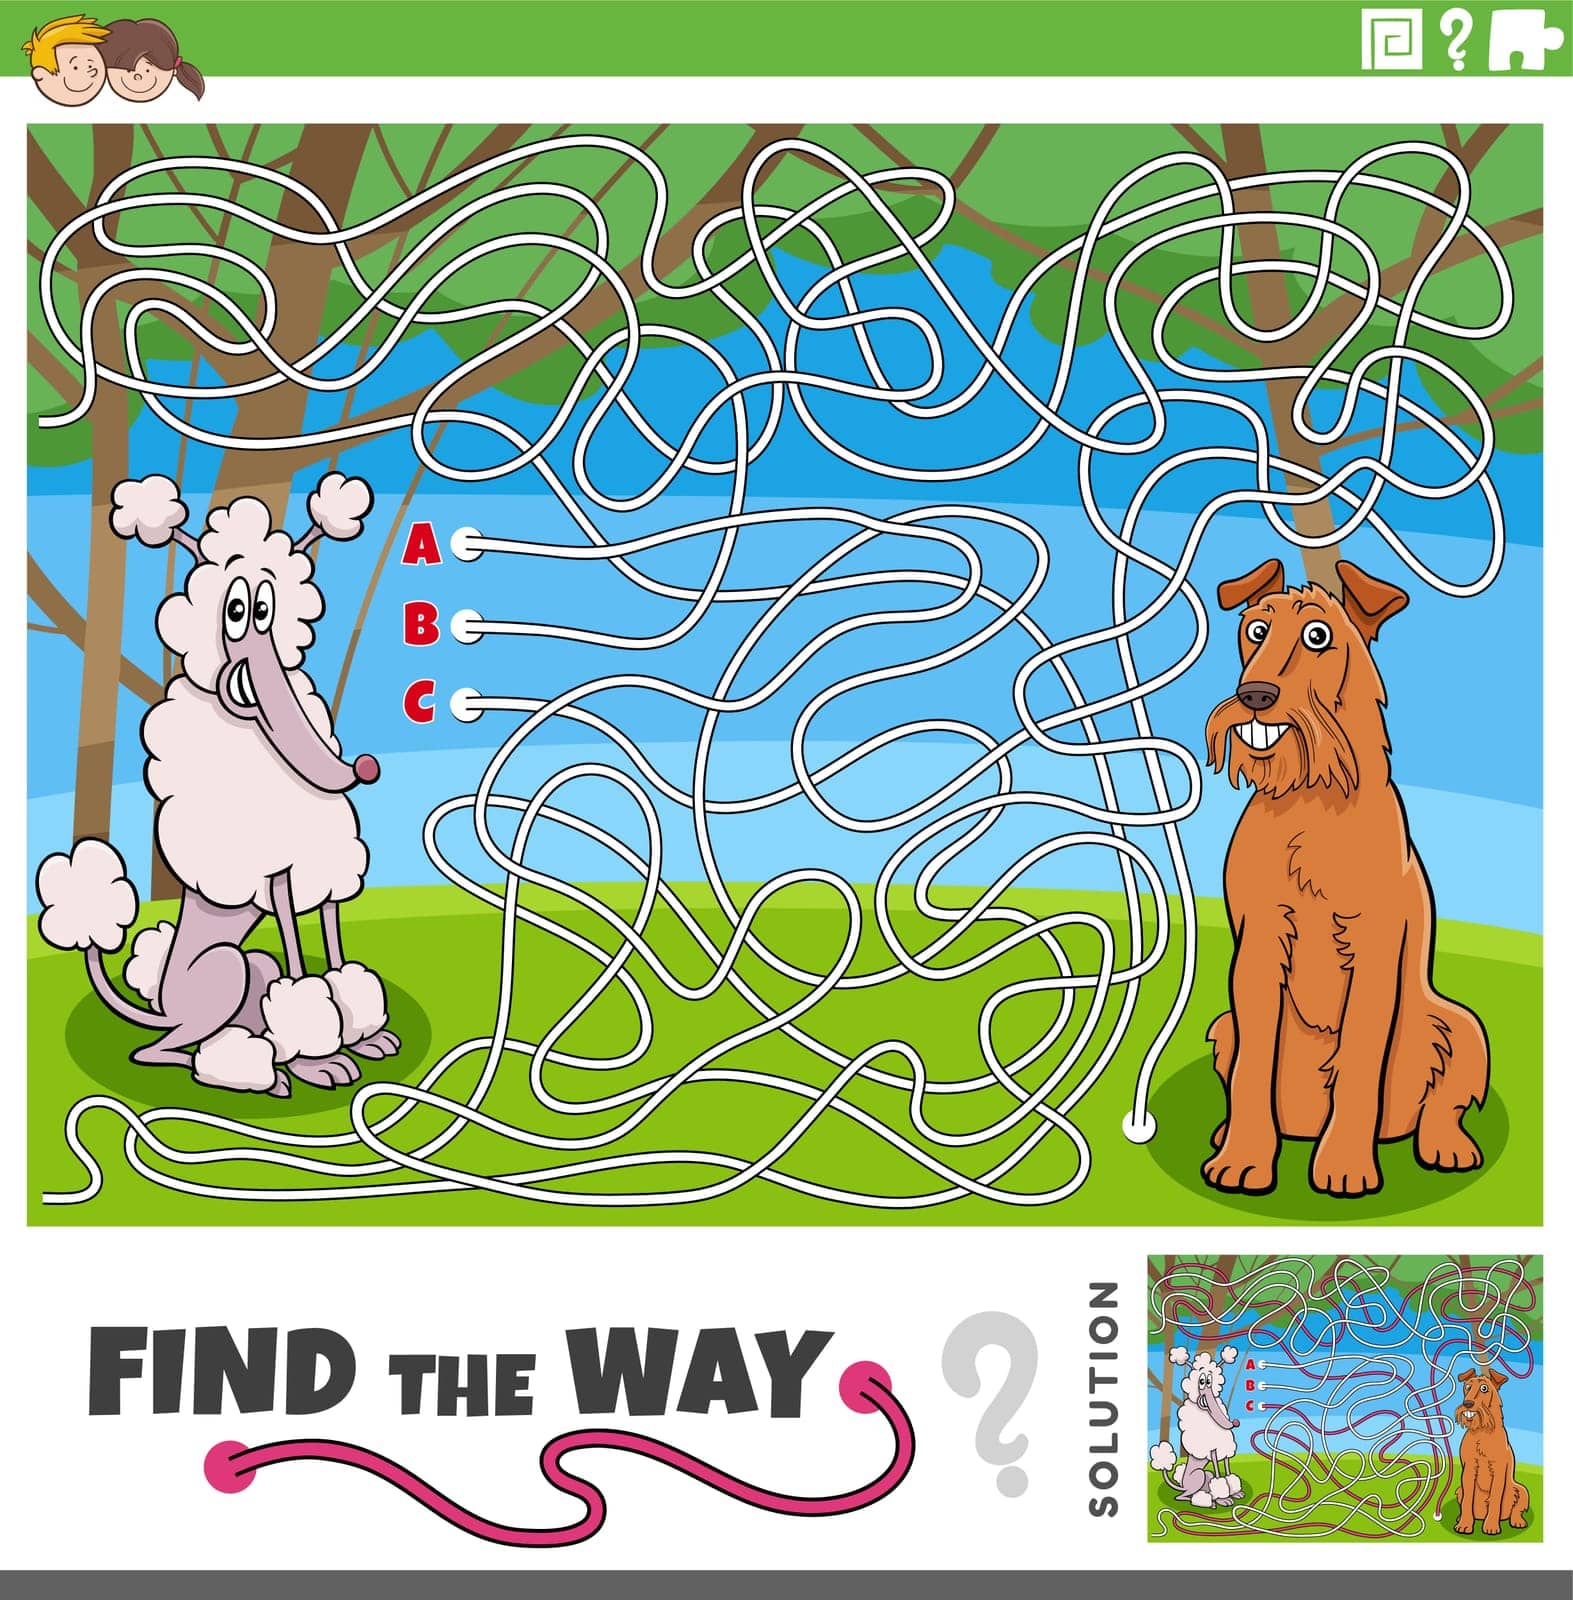 find the way maze activity with cartoon purebred dogs by izakowski